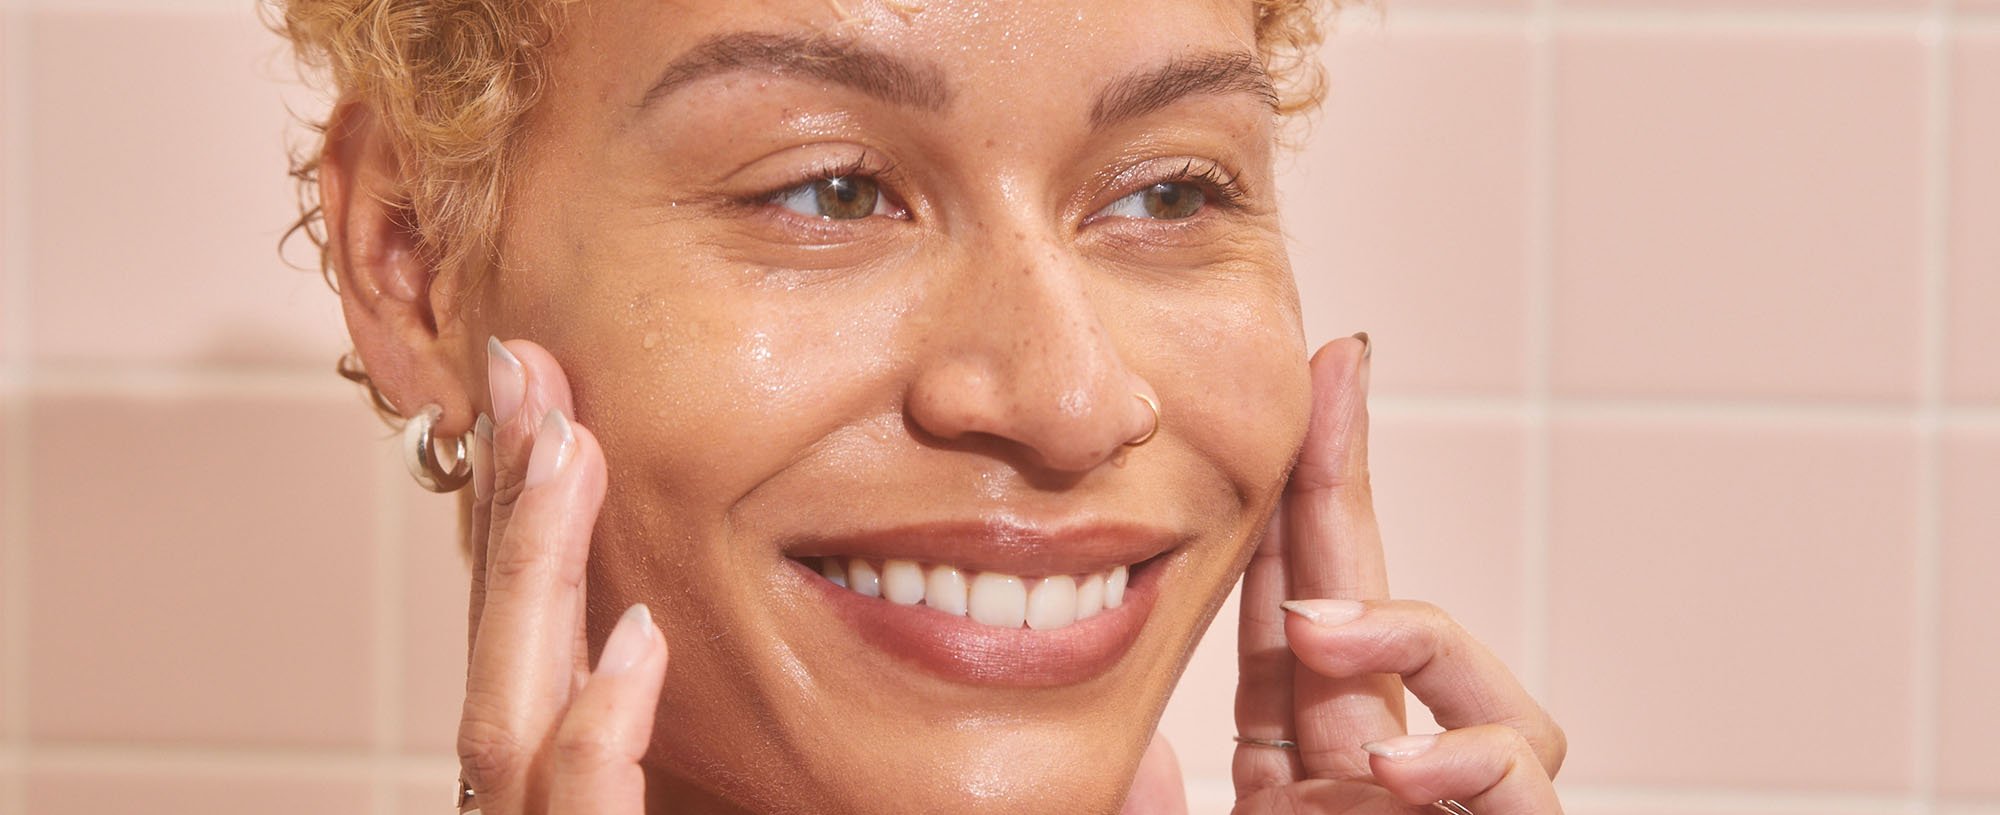 6 Types of Facials and Their Benefits - L'Oréal Paris